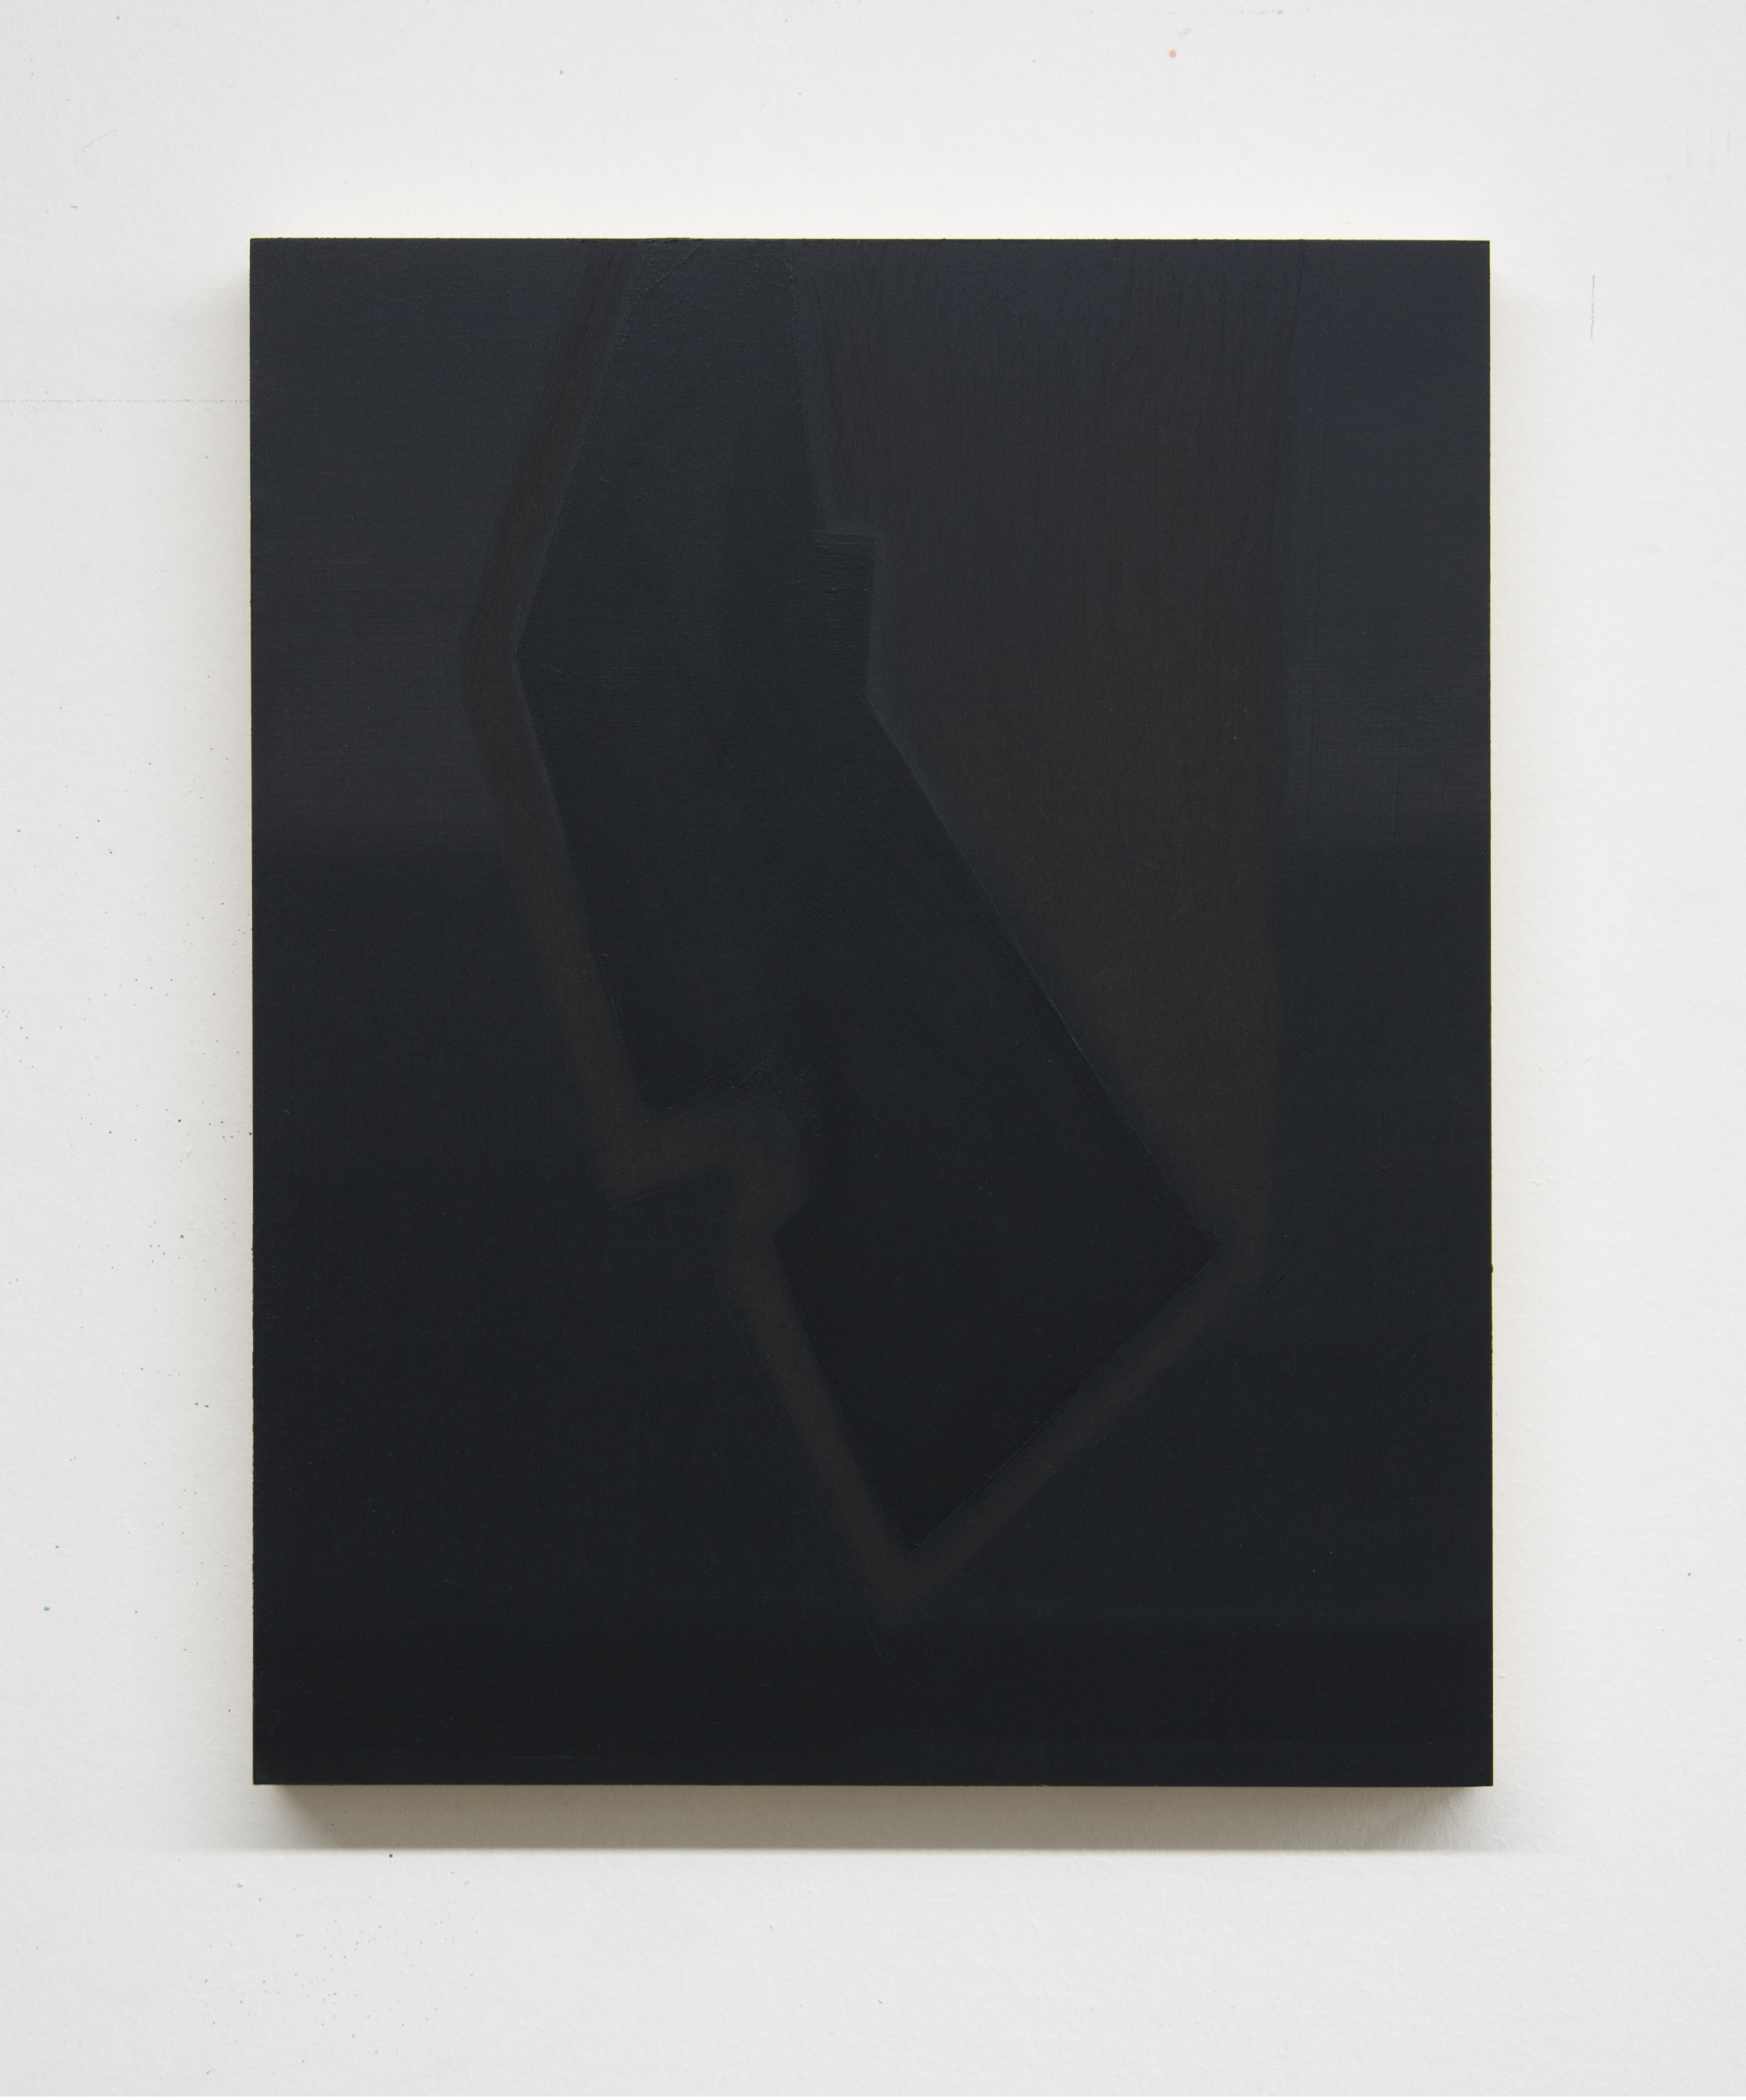  Tegami, 2017  Acrylic on panel, 10 x 8 inches 